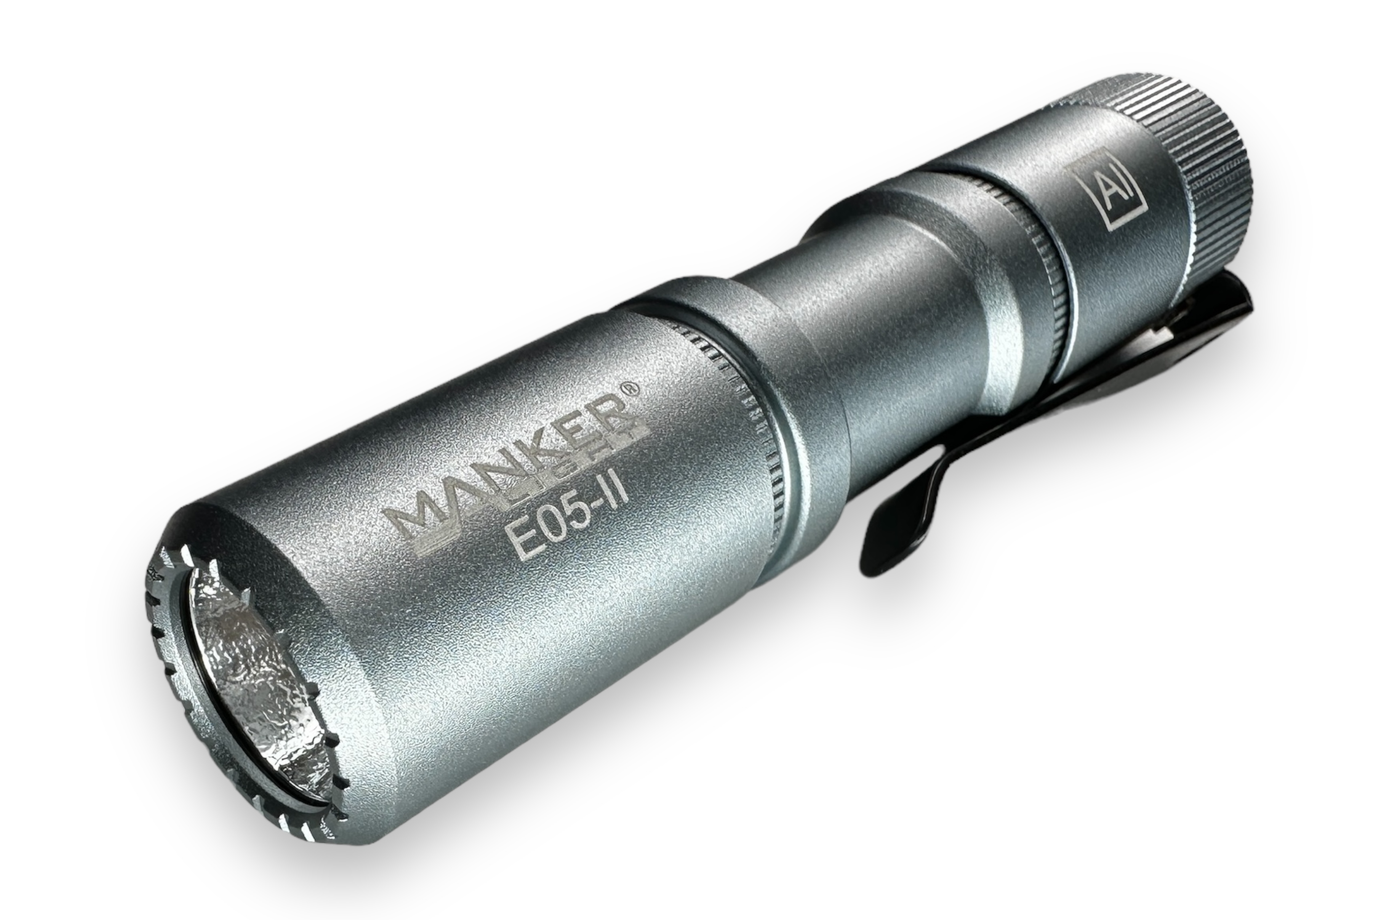 EO5 II Manker® - CC Exclusive Anvil Gray 14500 / AA Flashlight